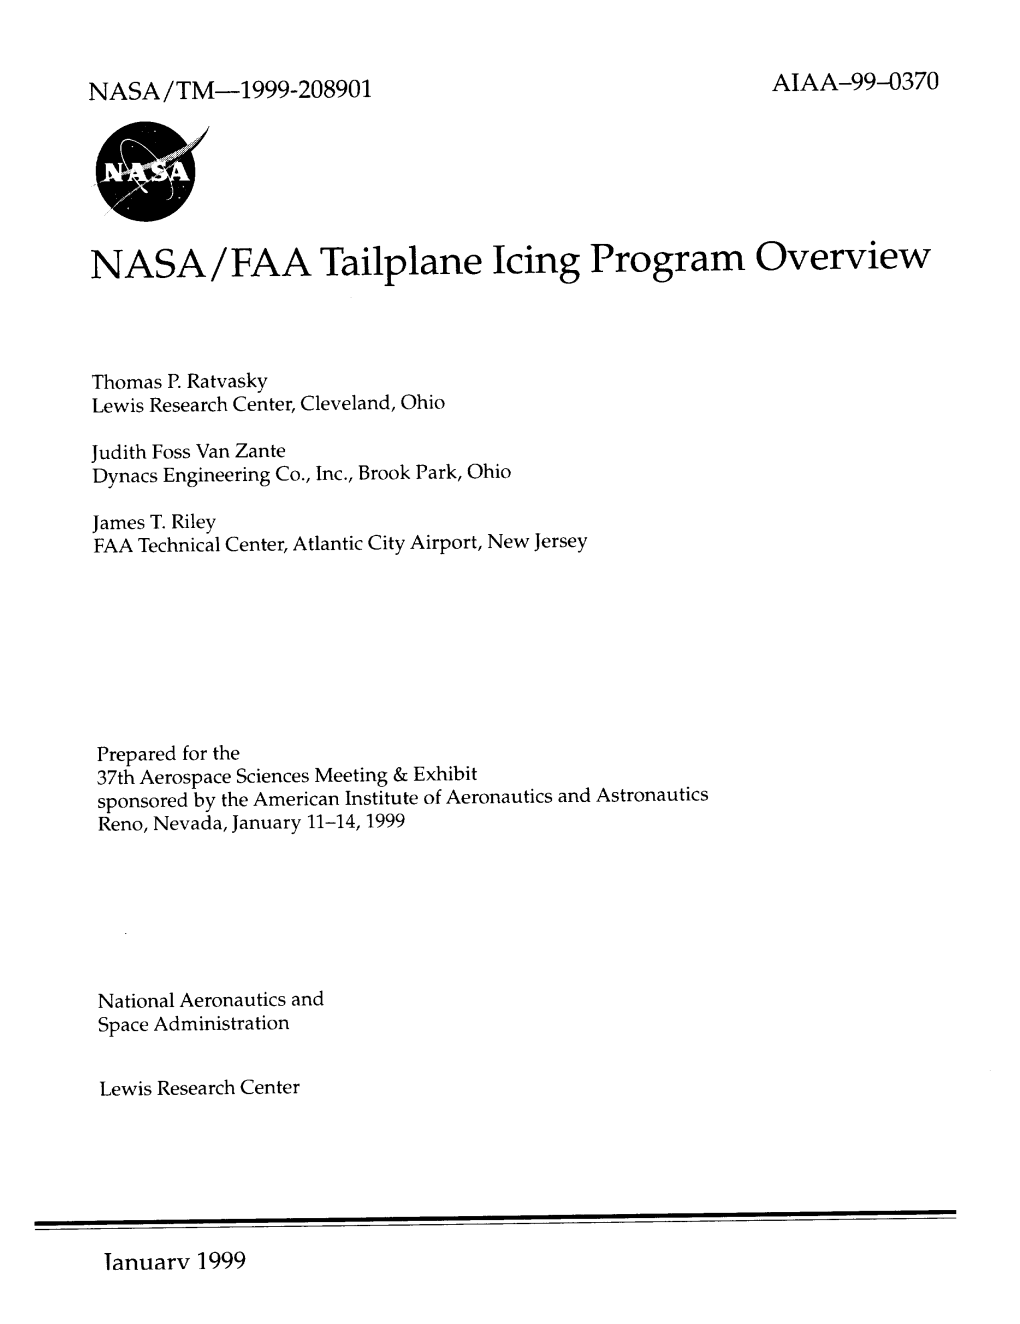 NASA/FAA Tailplane Icing Program Overview